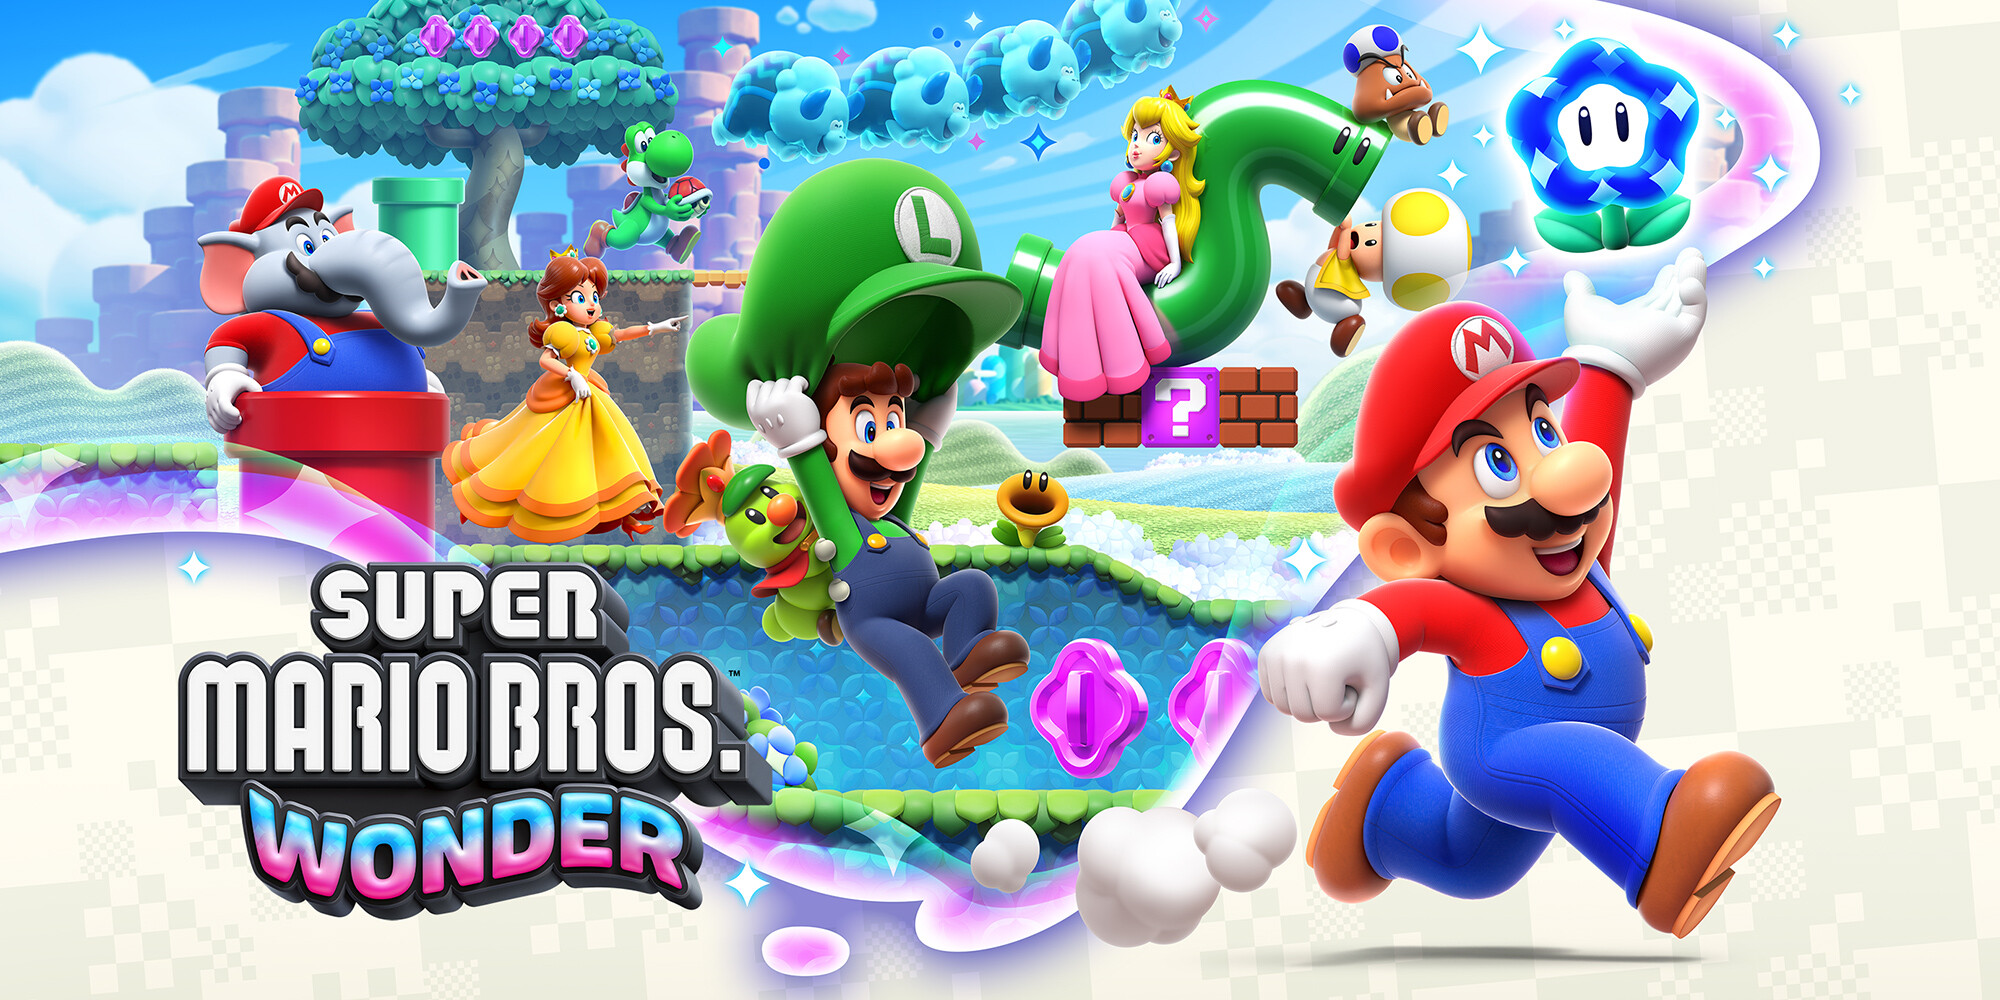 Nintendo Direct - Super Mario Bros: Wonder